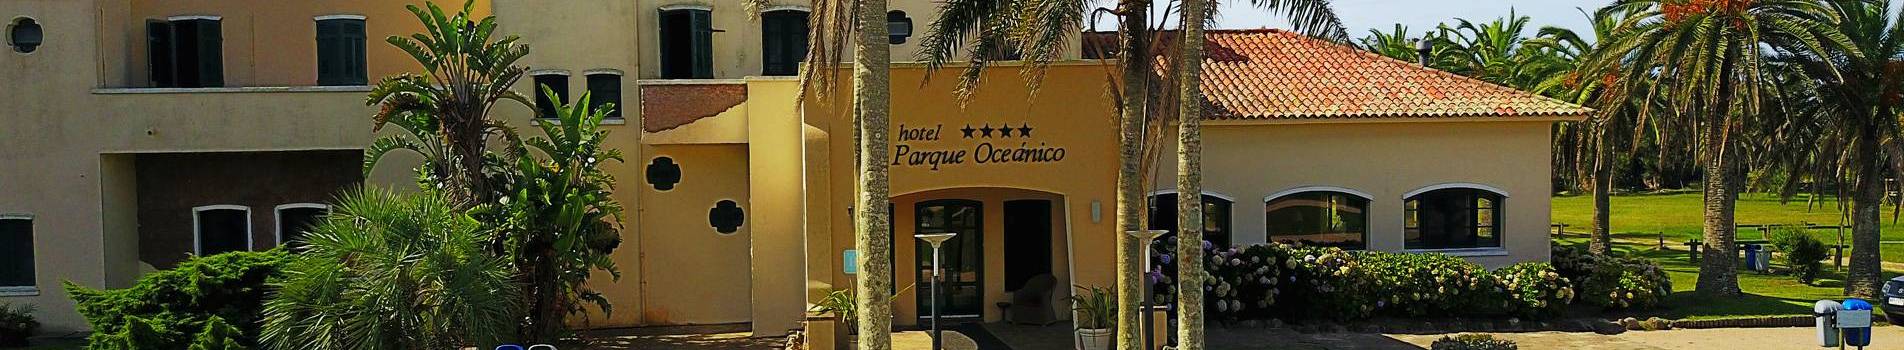 Hotel Parque Ocenico